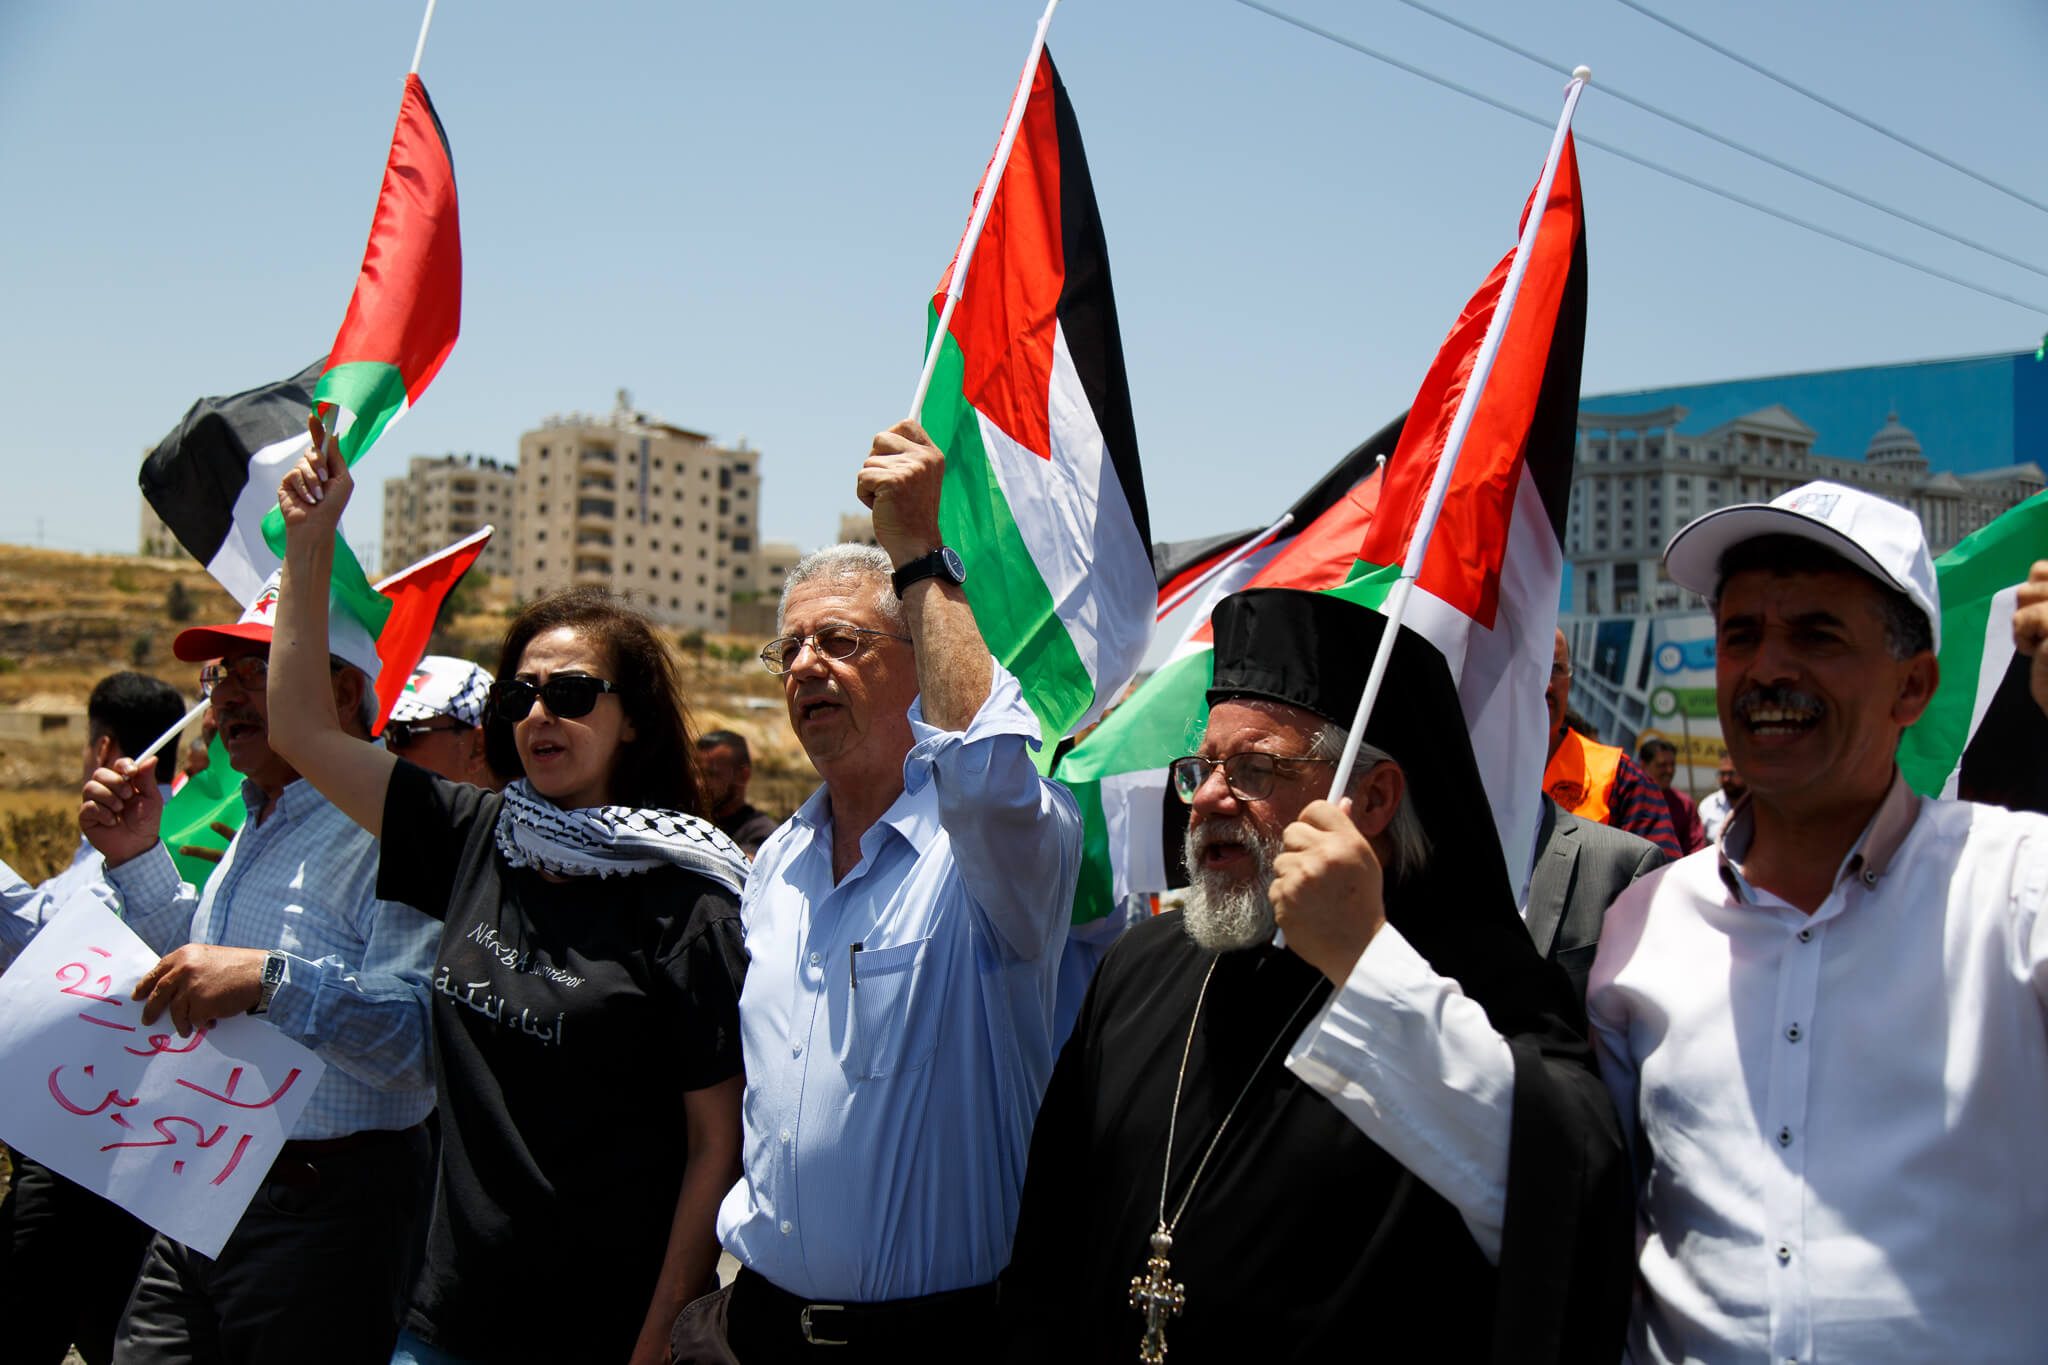 Mustafa Barghouti (center) protests the Trump administration's economic summit in Bahrain, outside of Ramallah, Wednesday June 26, 2019. (Photo: Miriam Deprez)